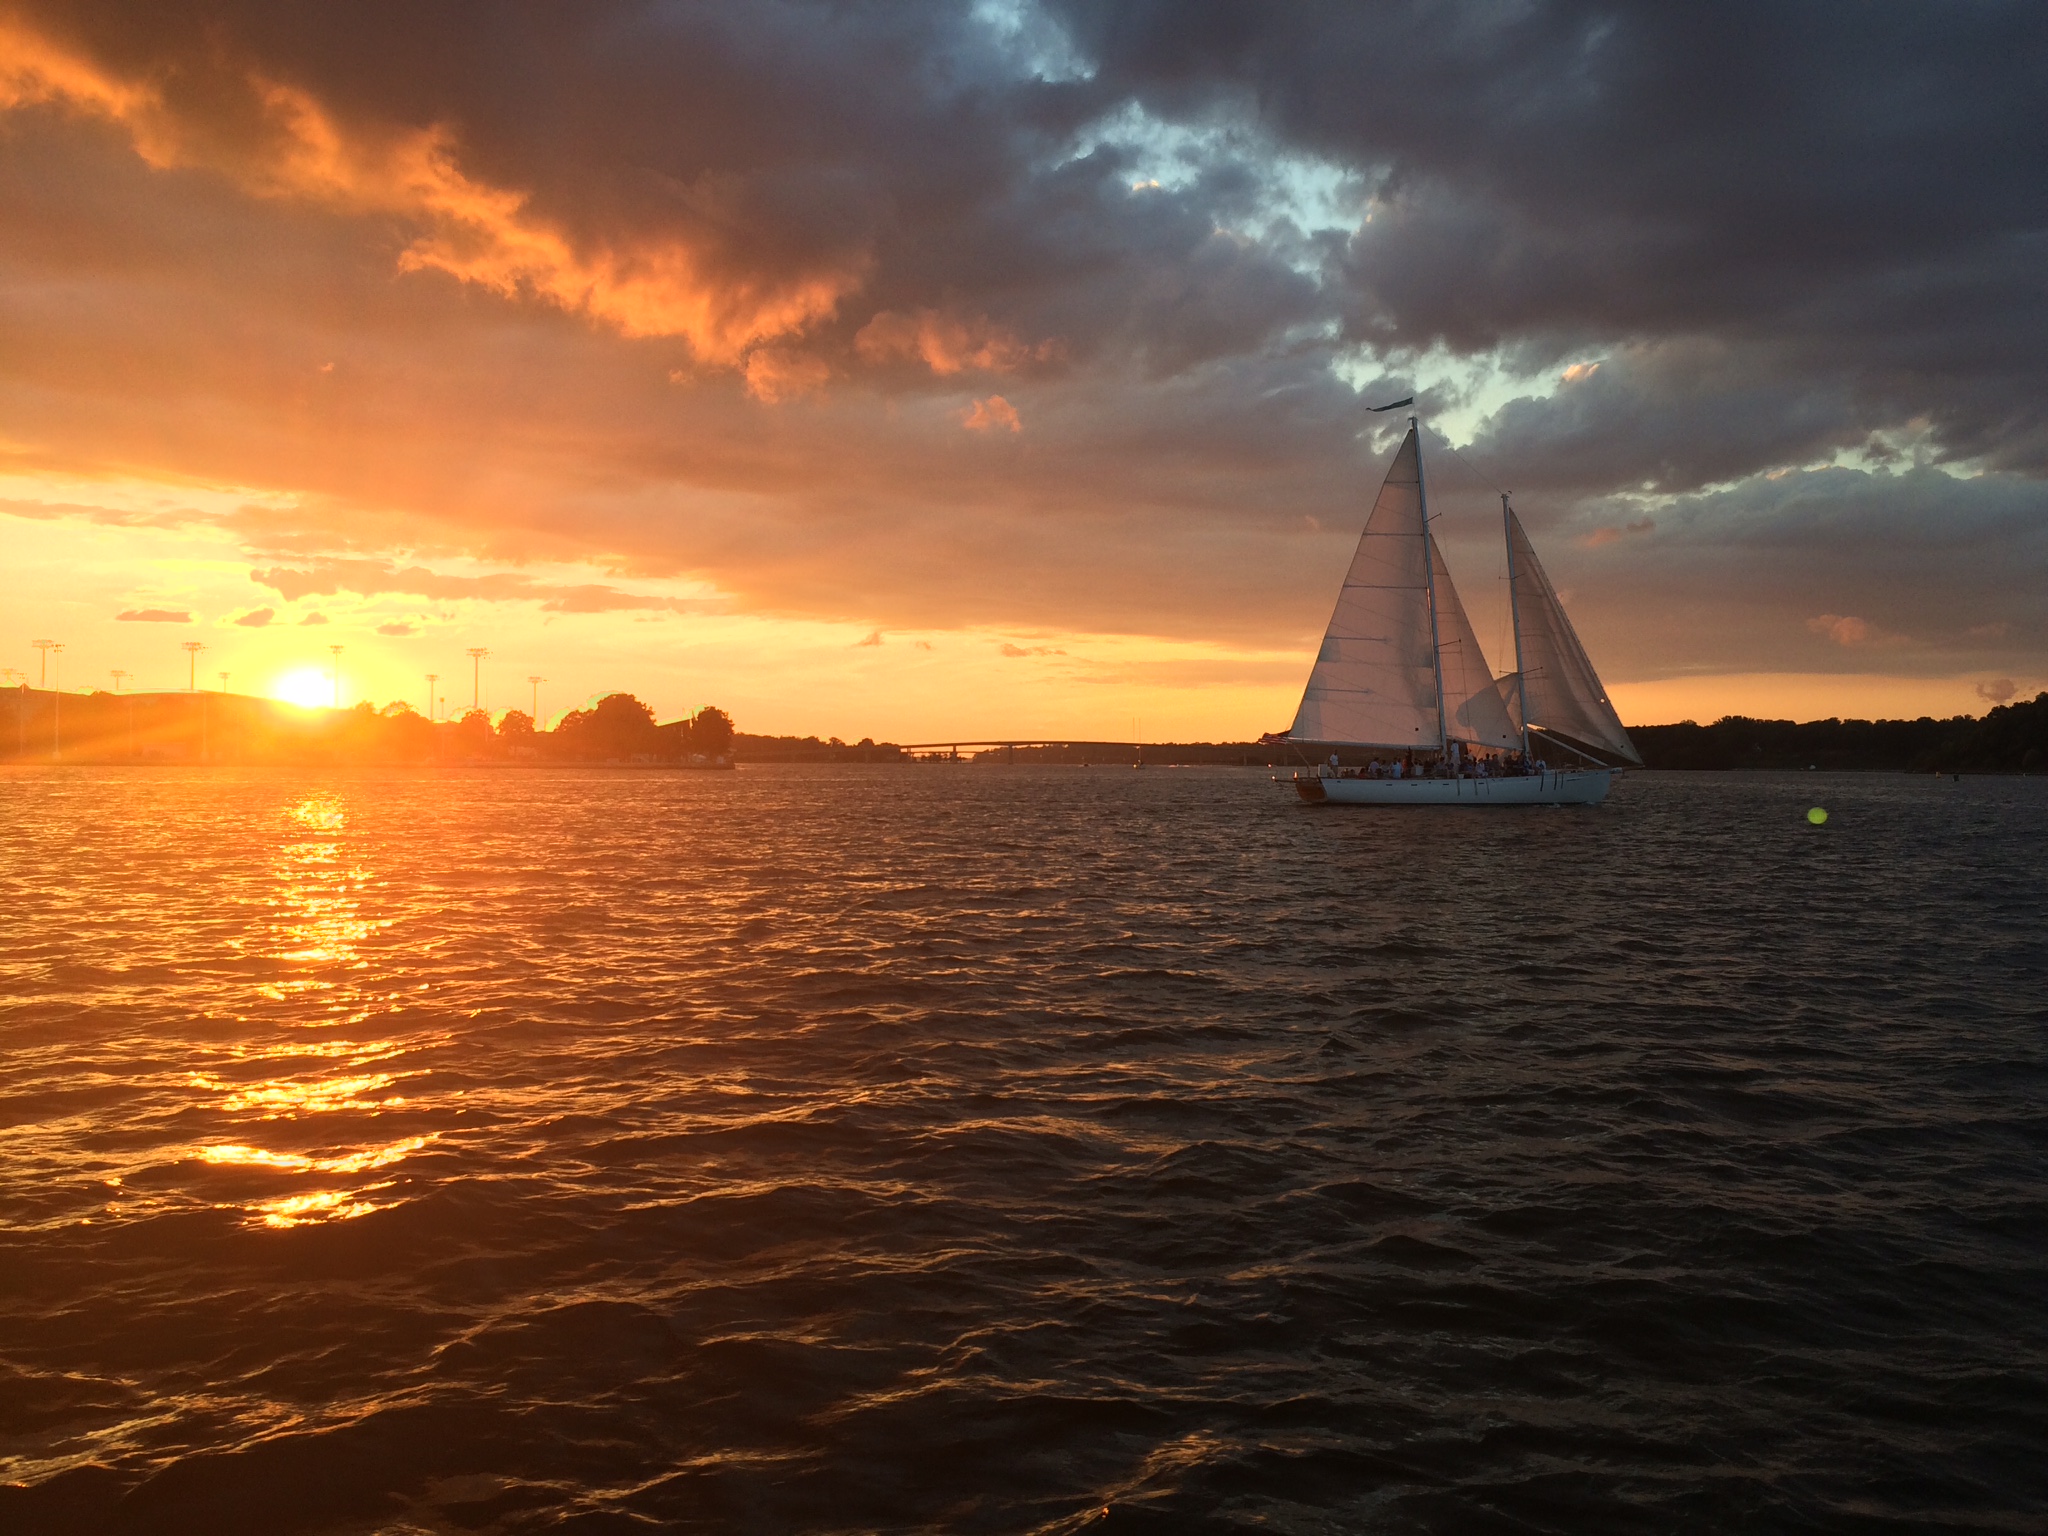 Sunset making everything glow orange with schooner sailing by